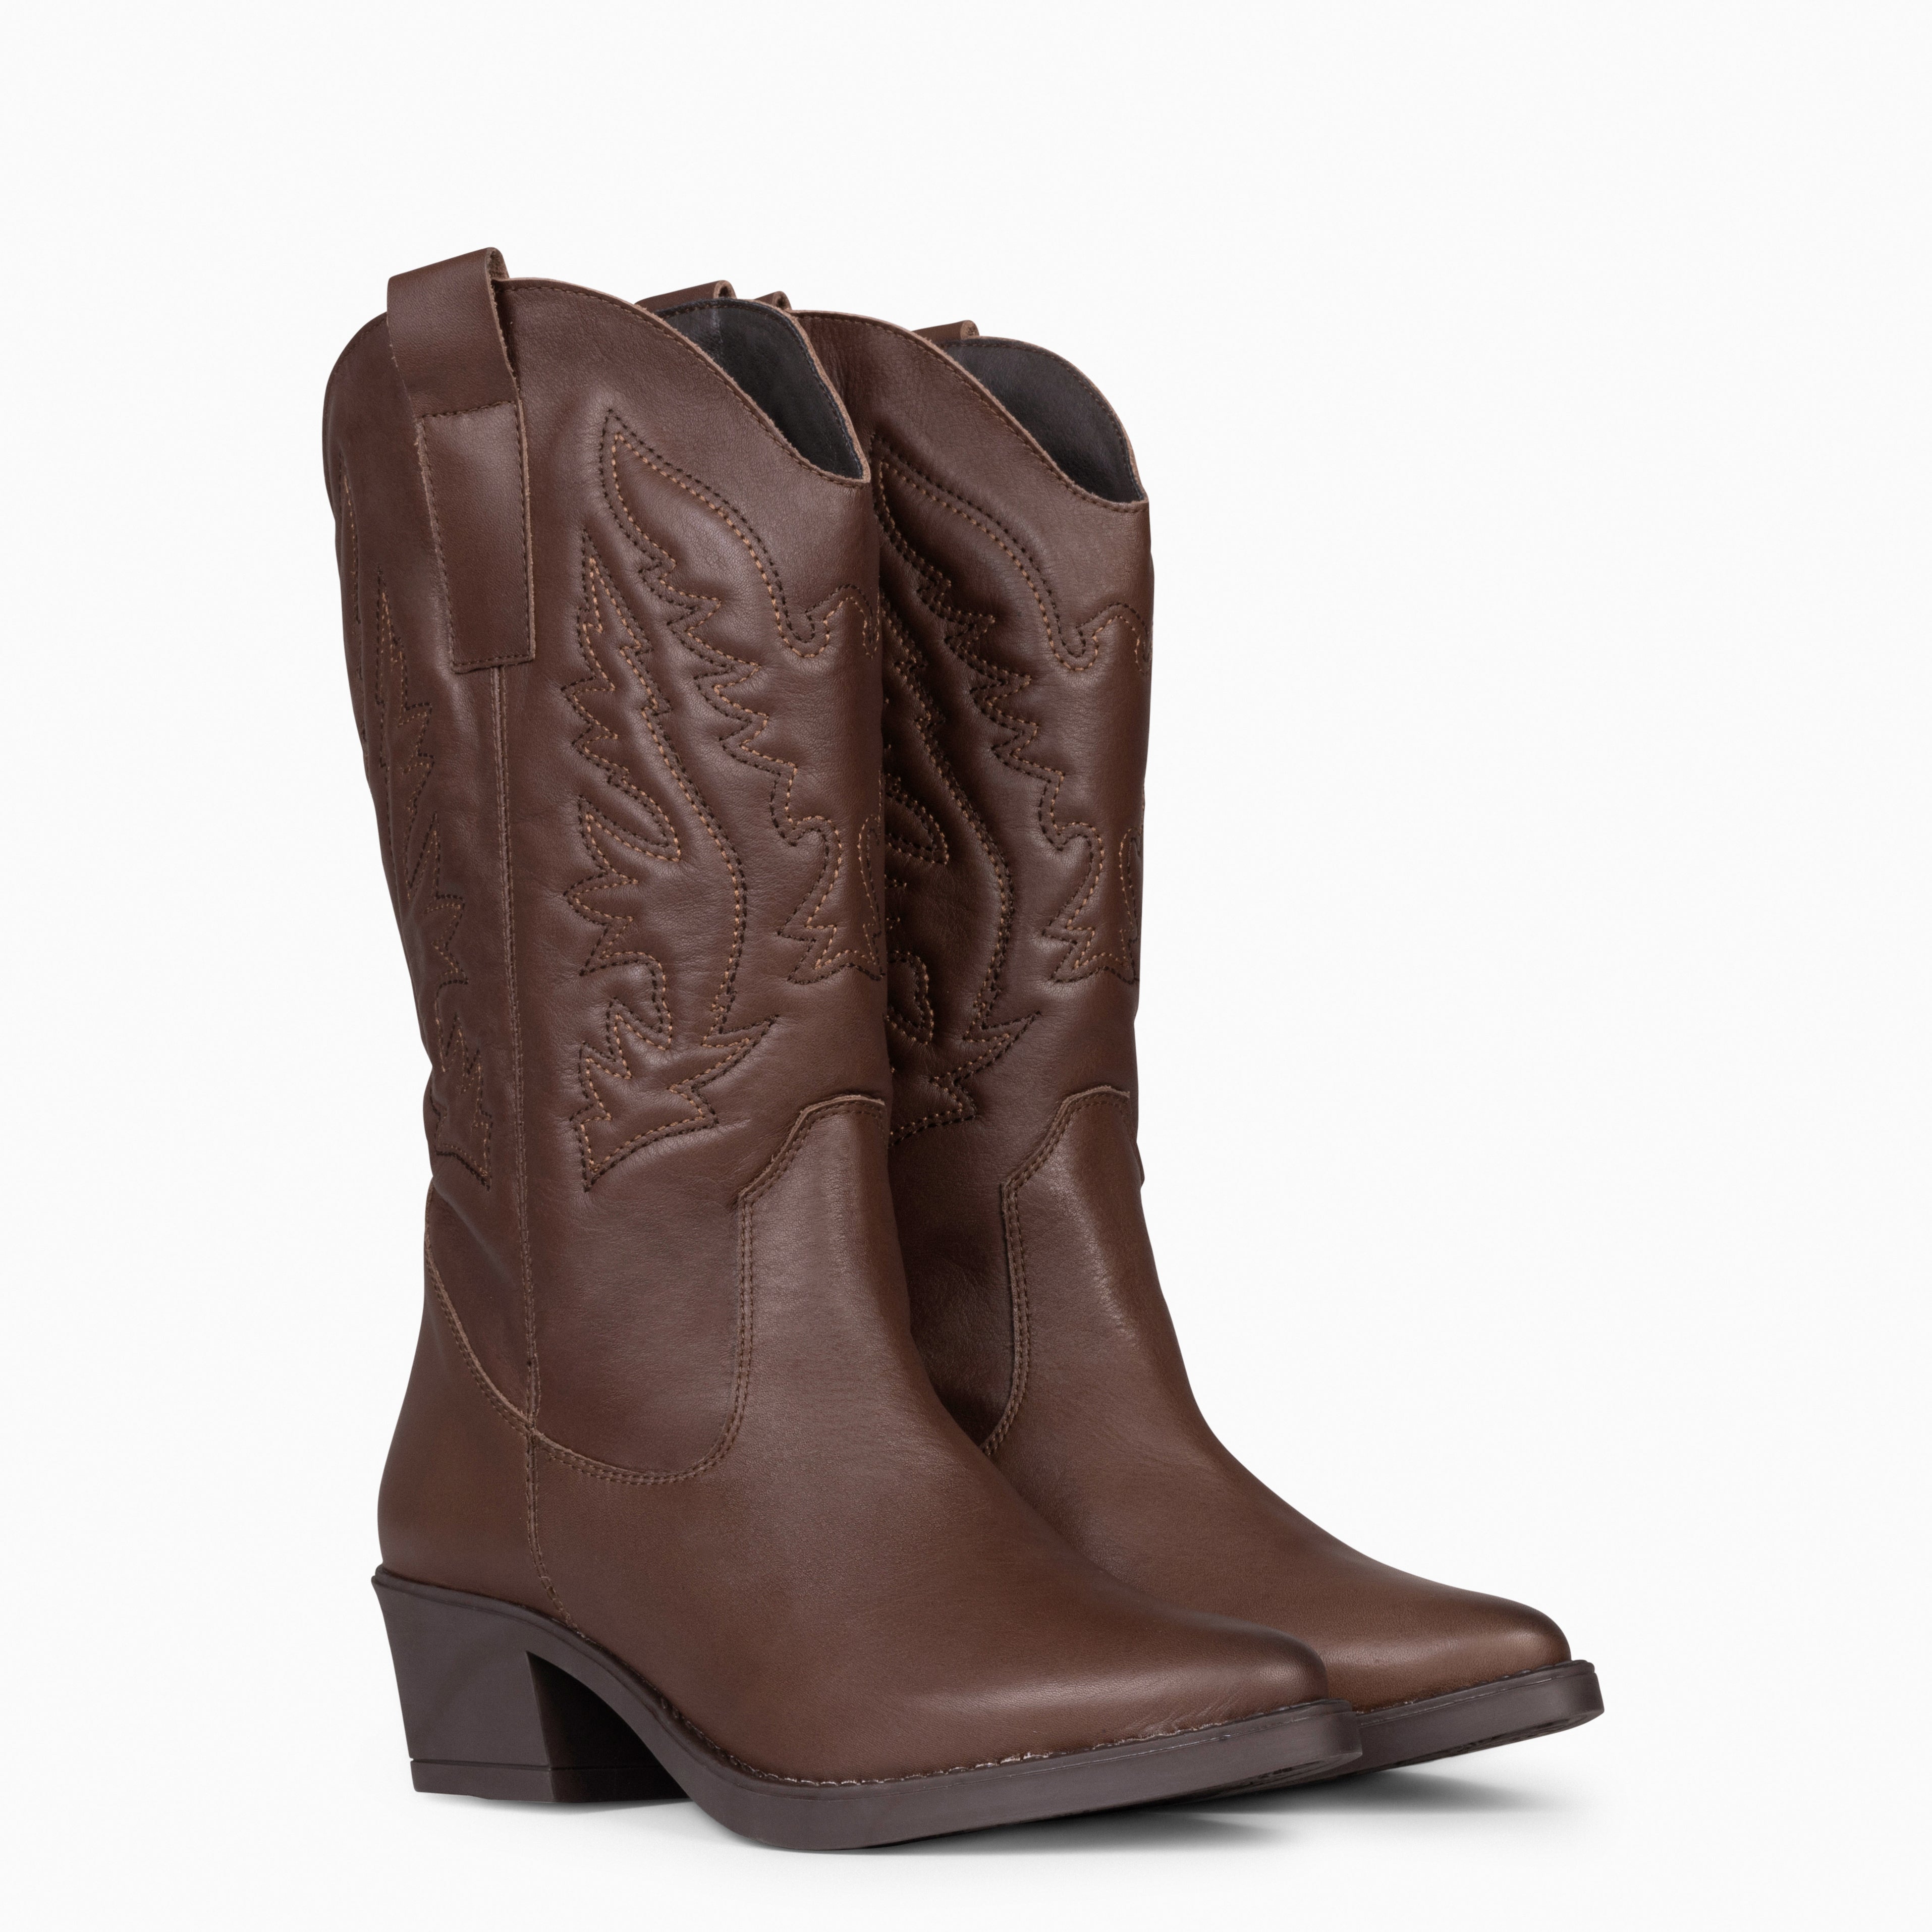 UTAH – BROWN Women cowboy boots 